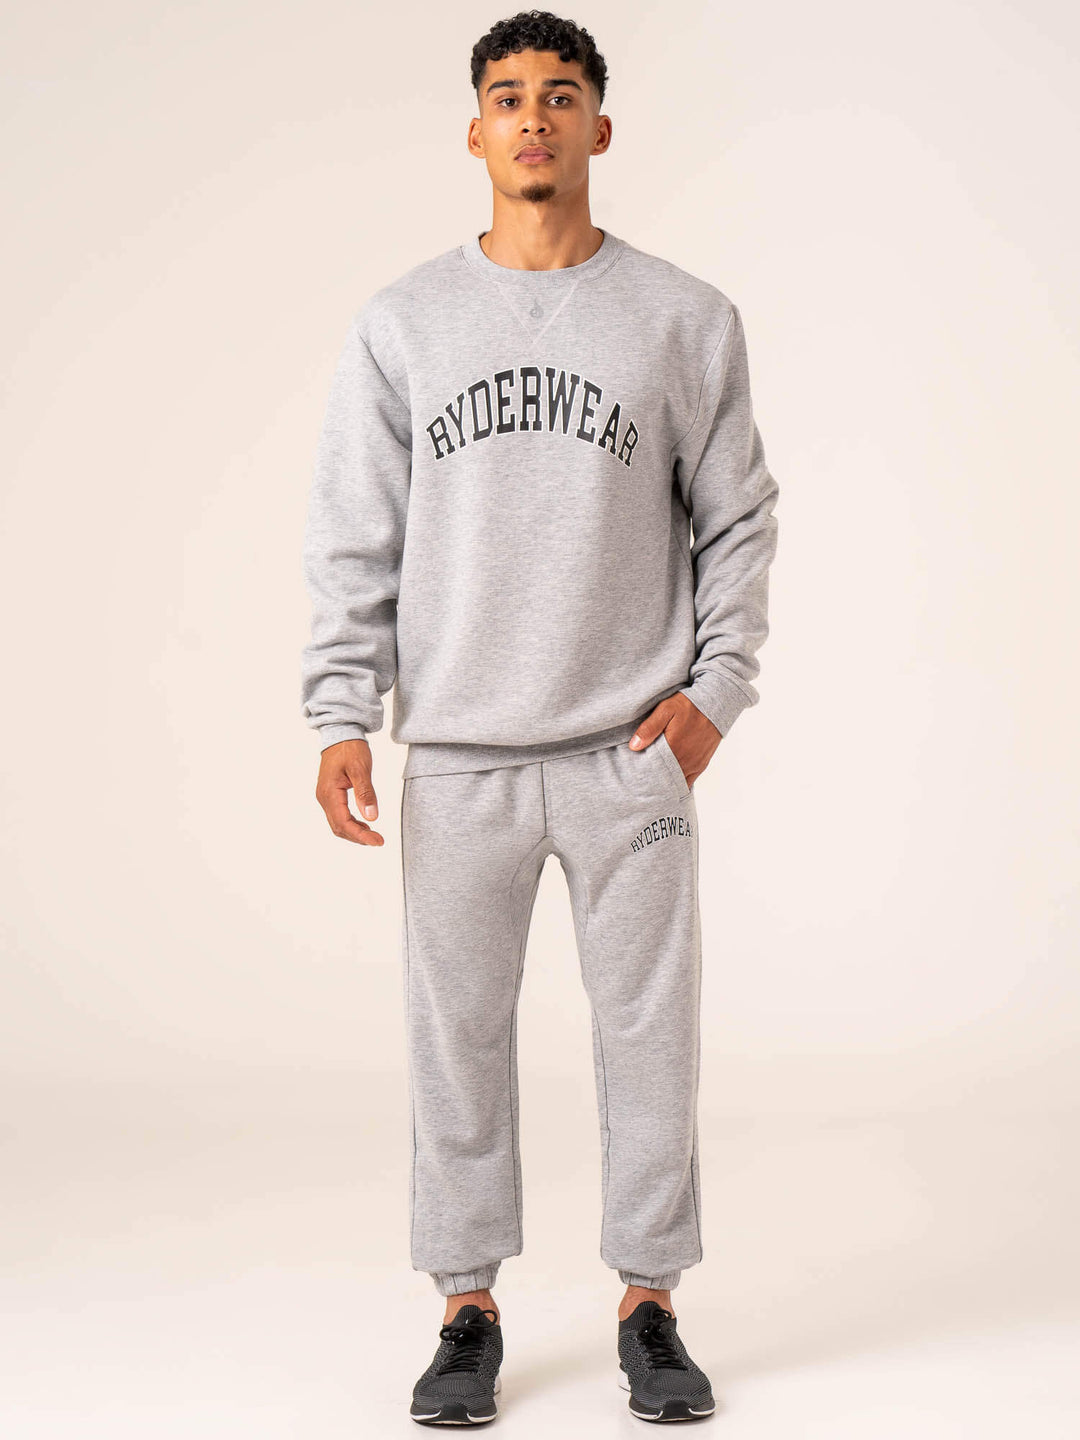 Men's Collegiate Crew Neck - Grey Marl Clothing Ryderwear 